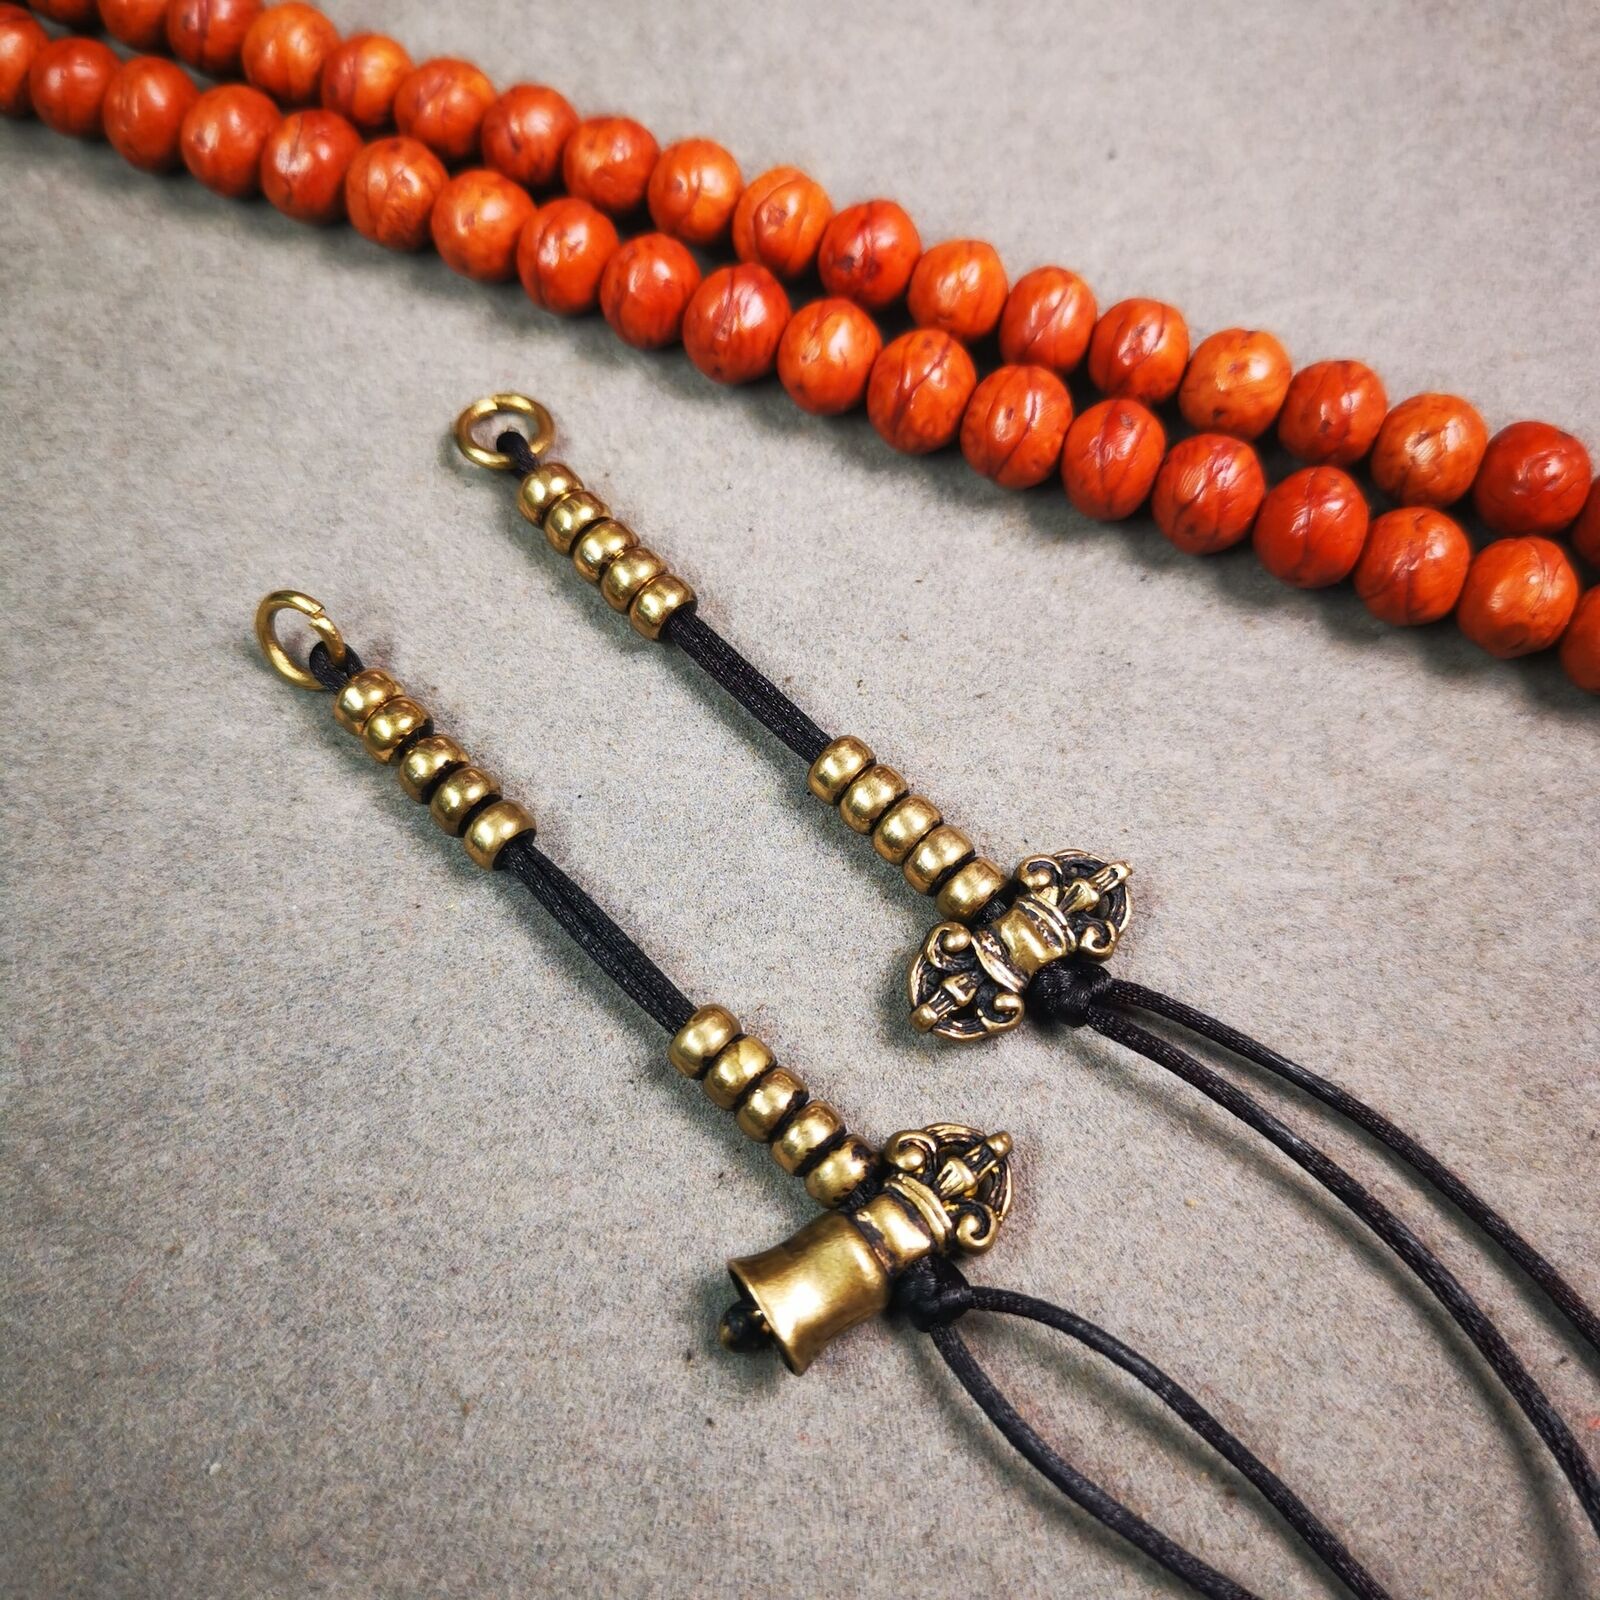 Gandhanra Handmade Tibetan Buddhist Mala Bead Counters for Prayer Bead Necklace